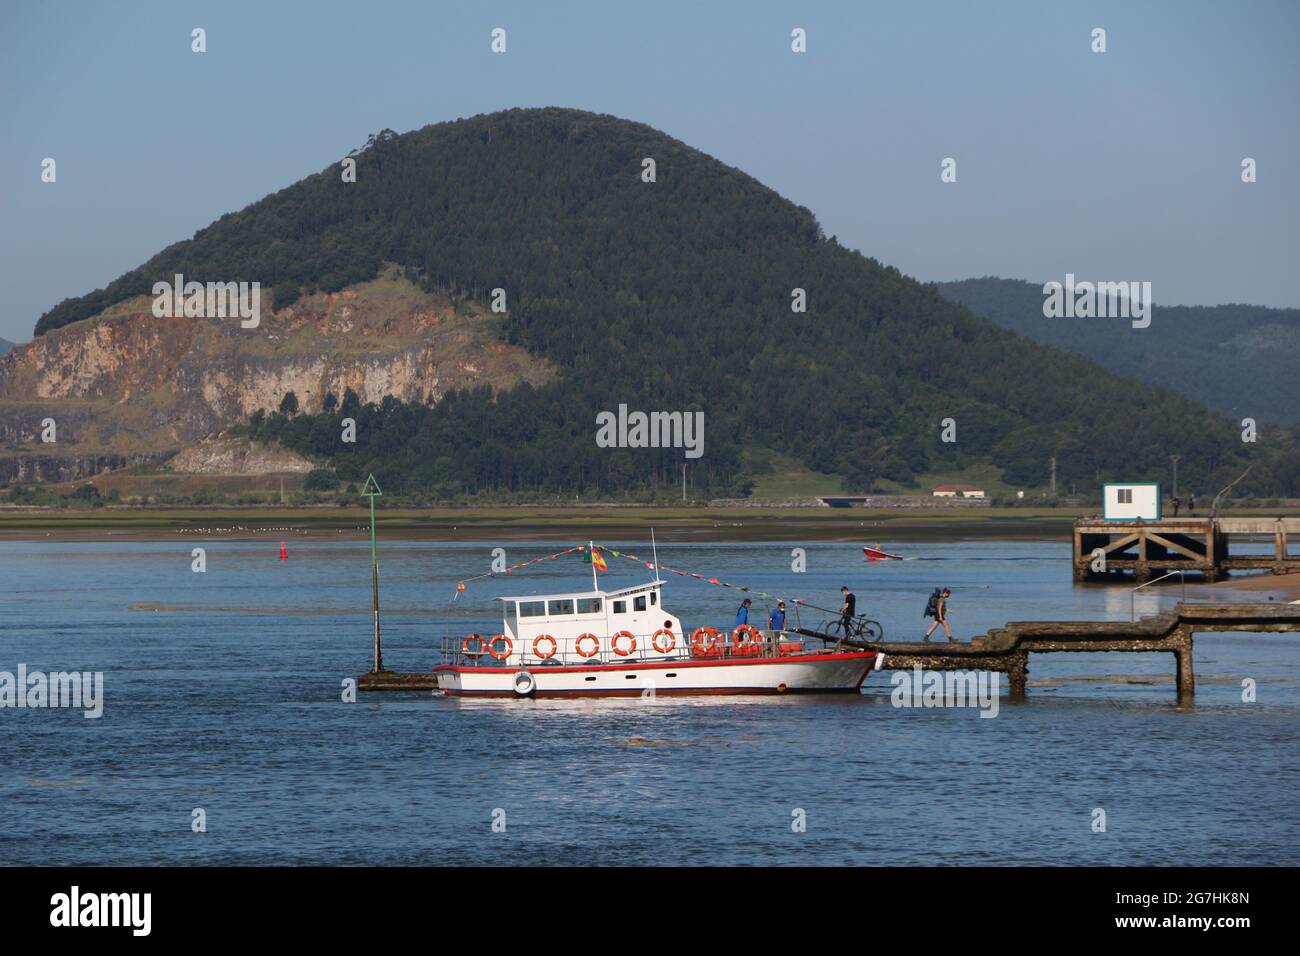 The Santona - Laredo ferry at the jetty in Santona Cantabria Spain on a sunny June morning with few passengers Stock Photo